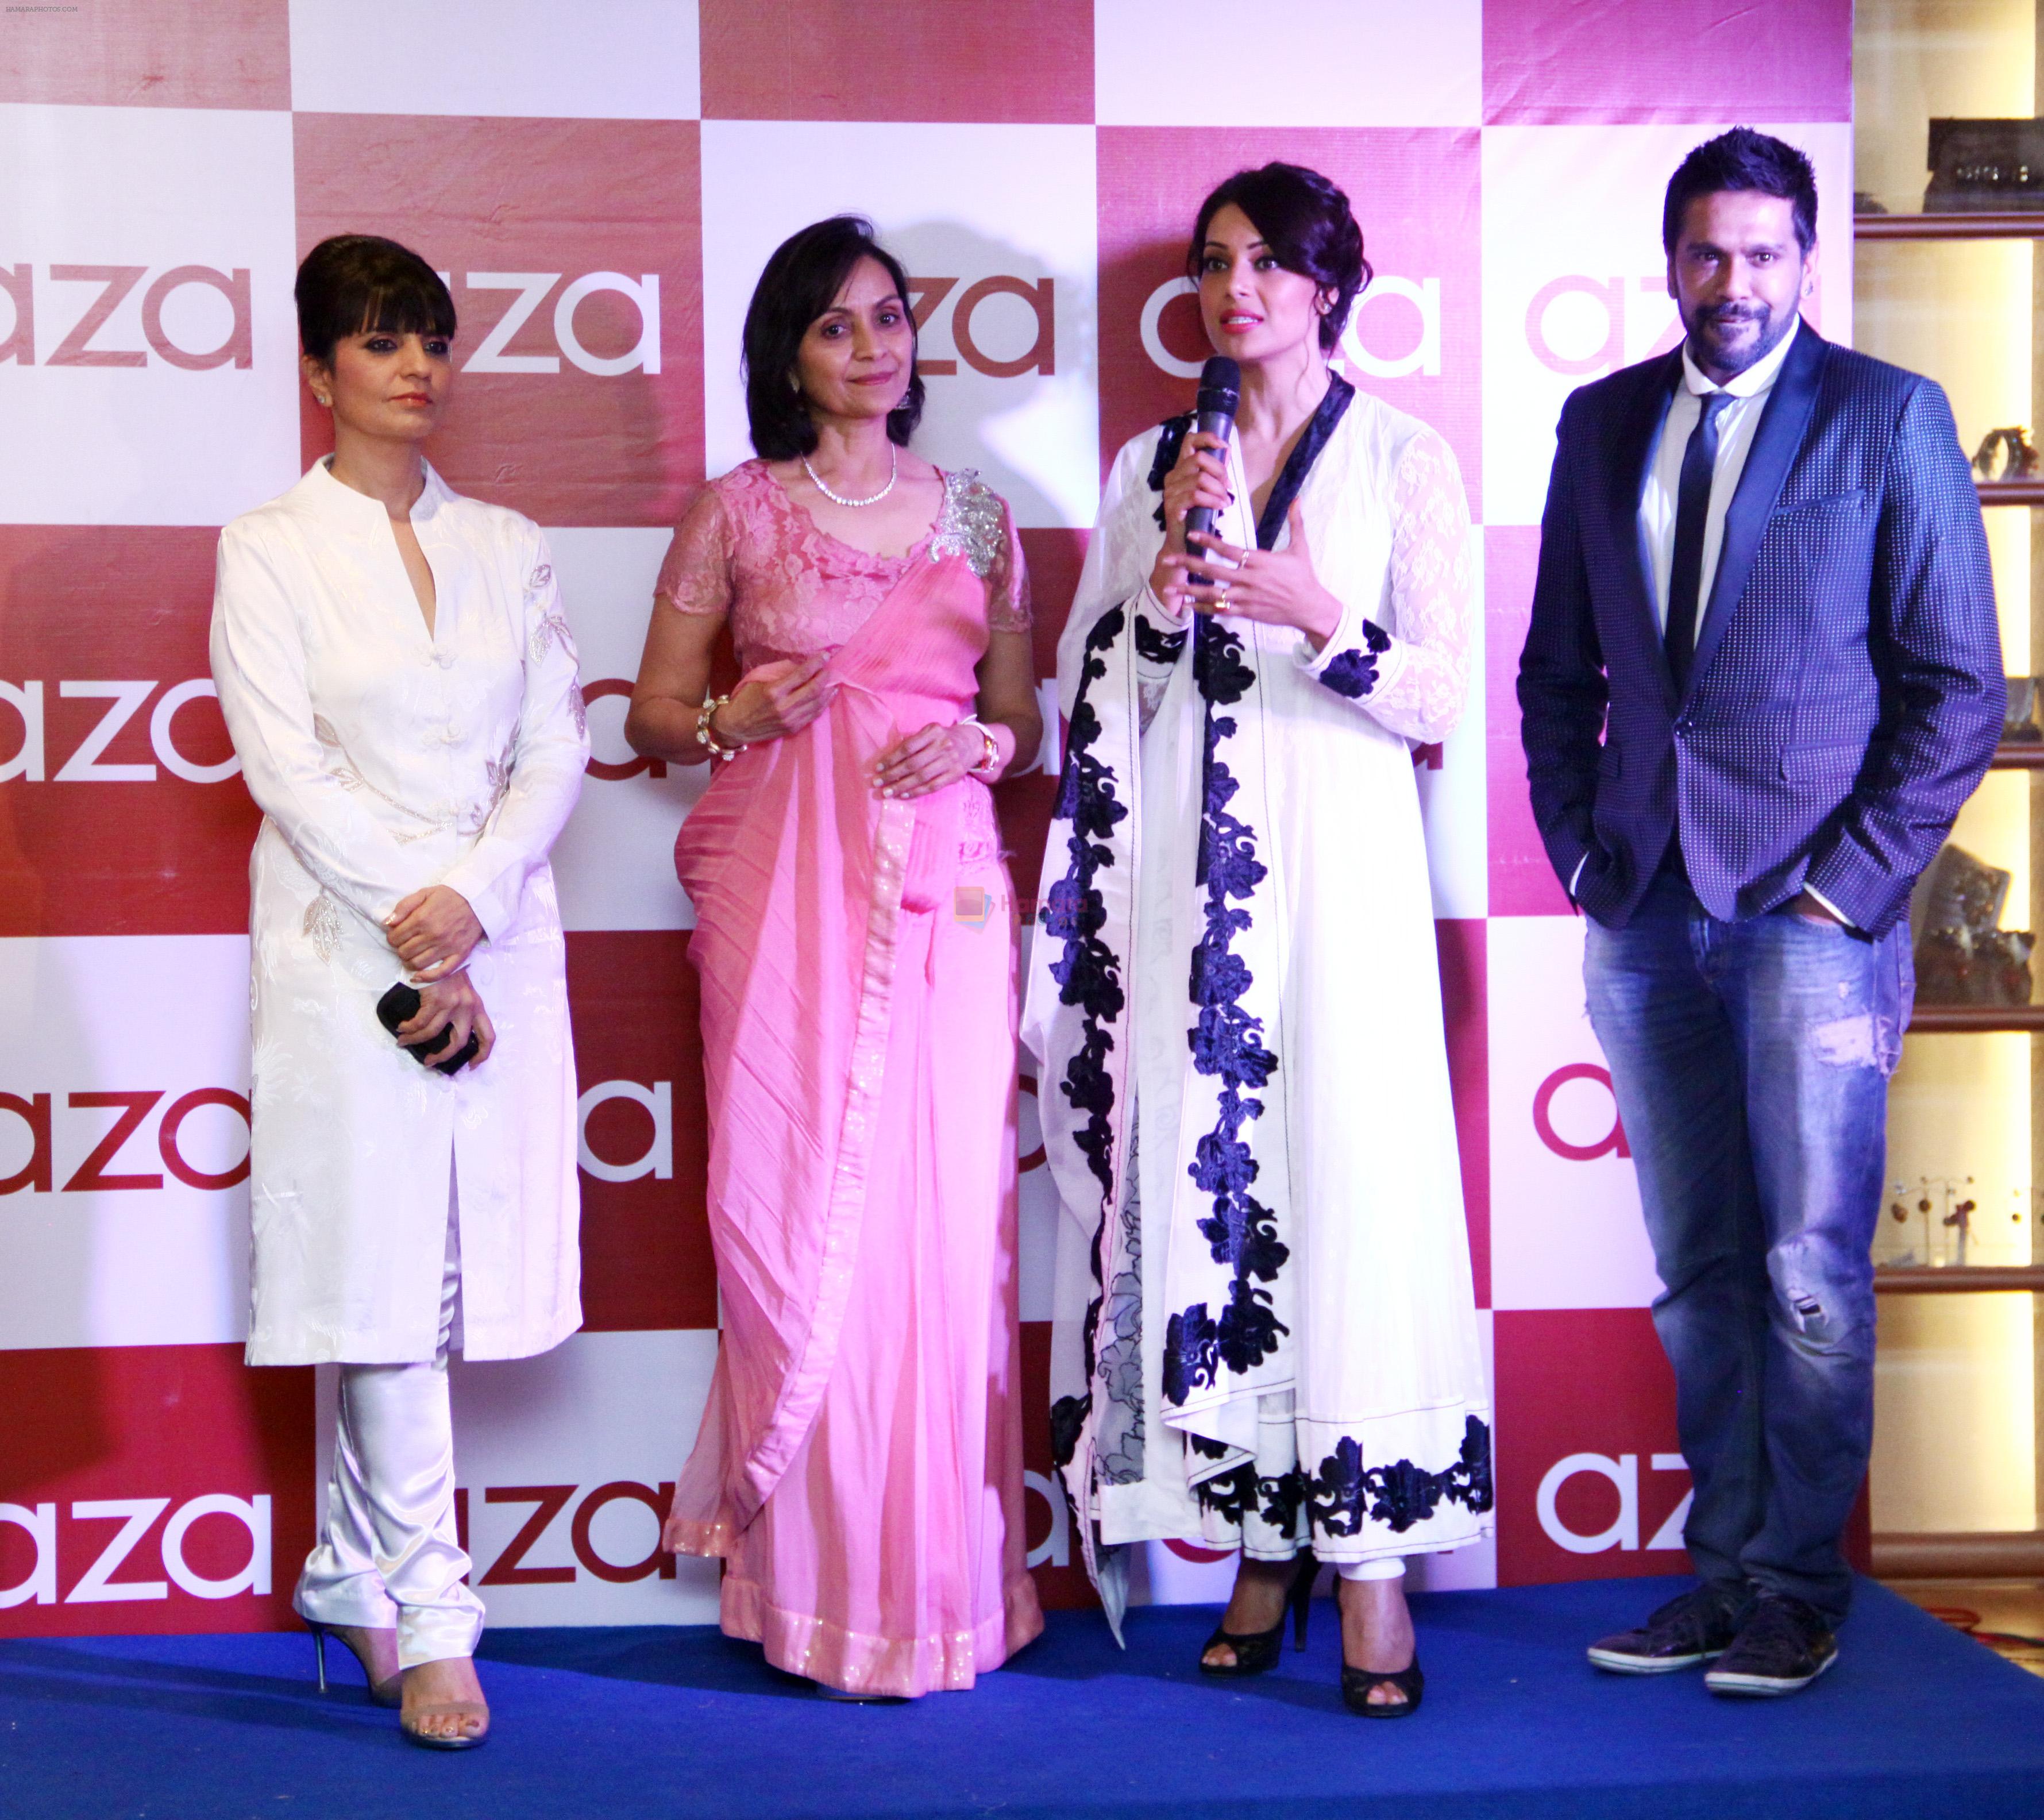 Neeta Lulla, Alka Nishar- founder of Aza, Bipasha Basu and Rocky S at the Aza store launch in Ludhiana on 18th May 2012